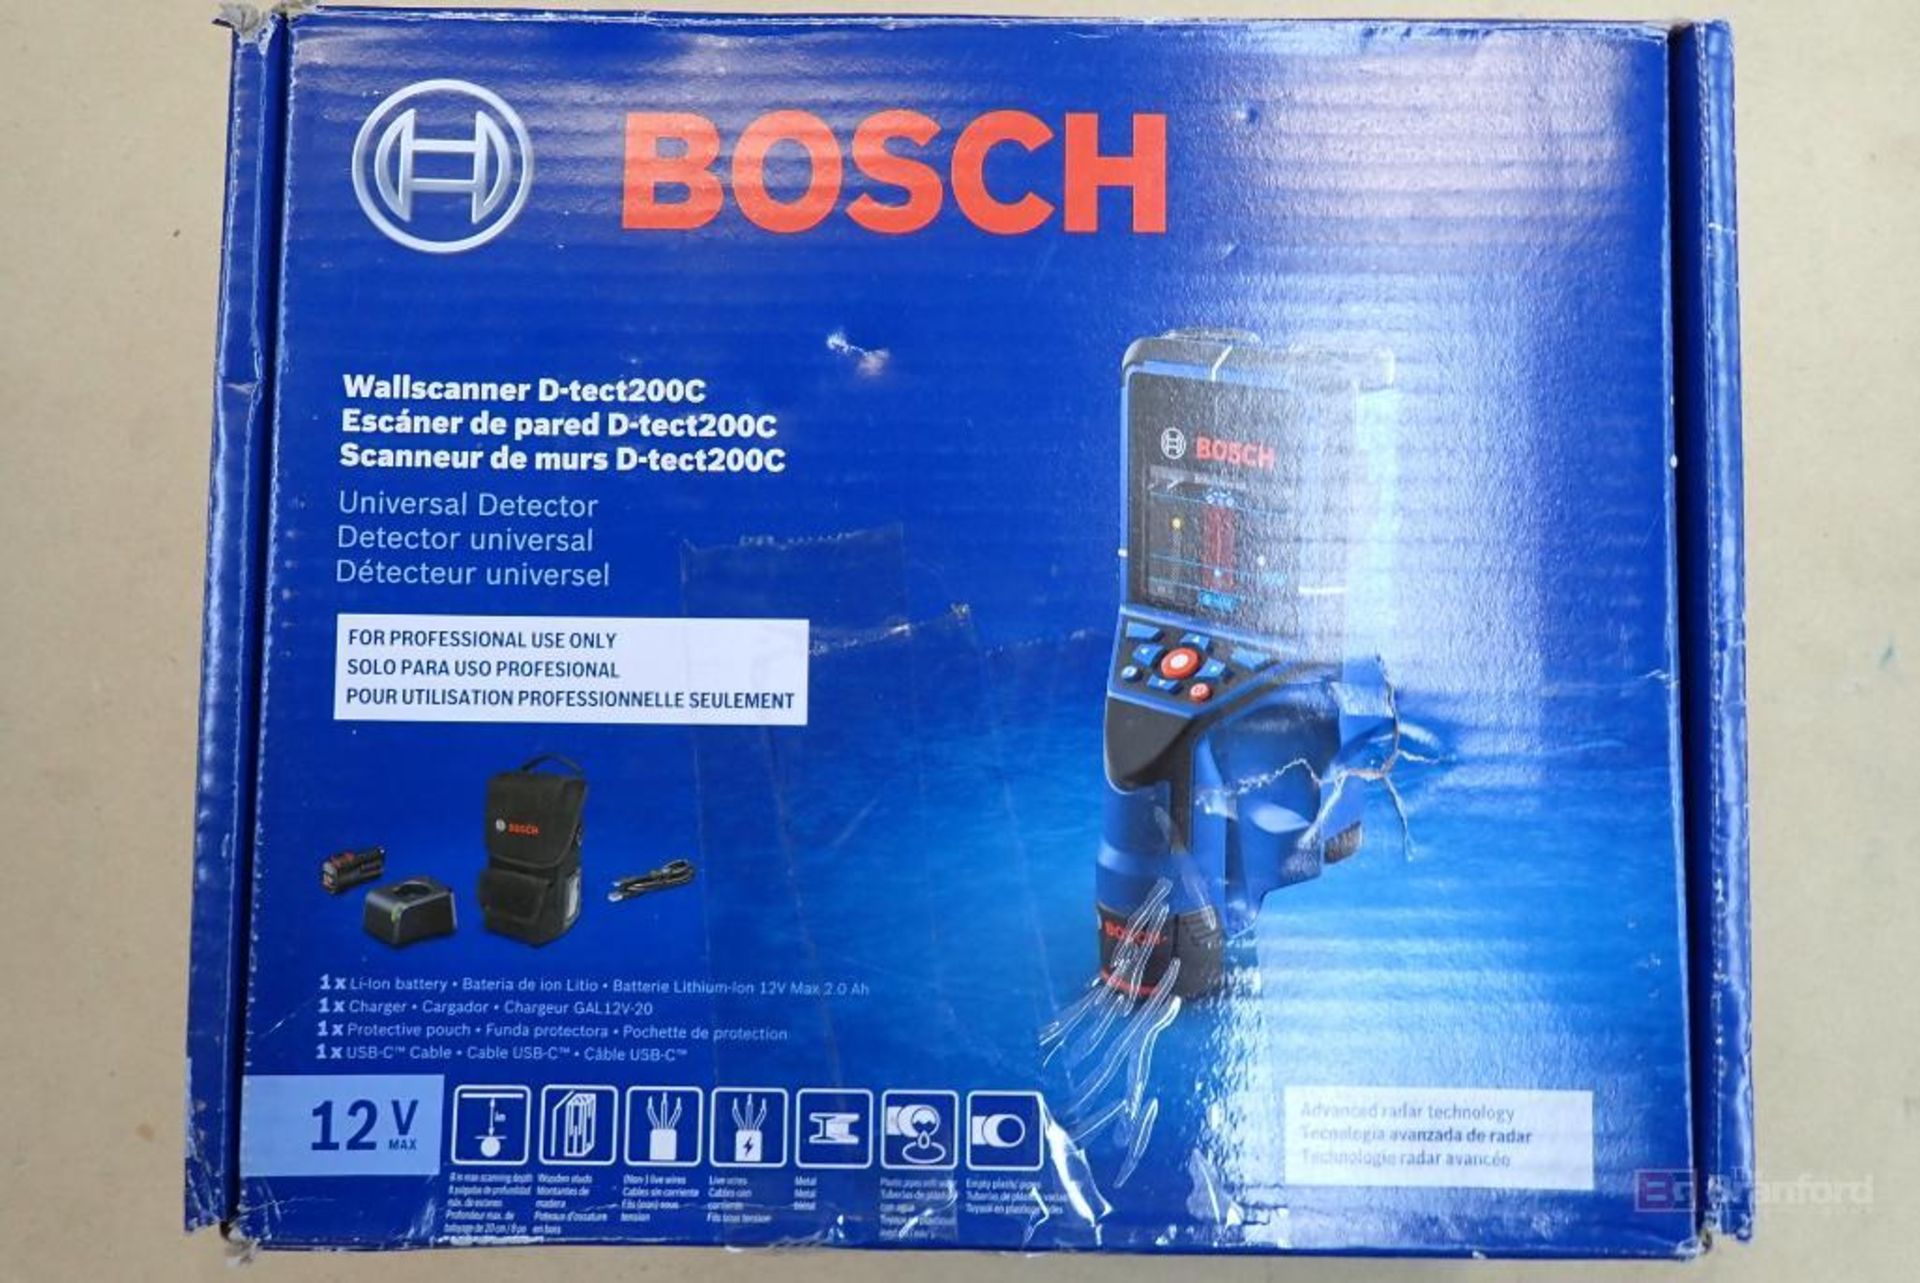 Bosch D-tect200C Wallscanner Kit - Image 2 of 4